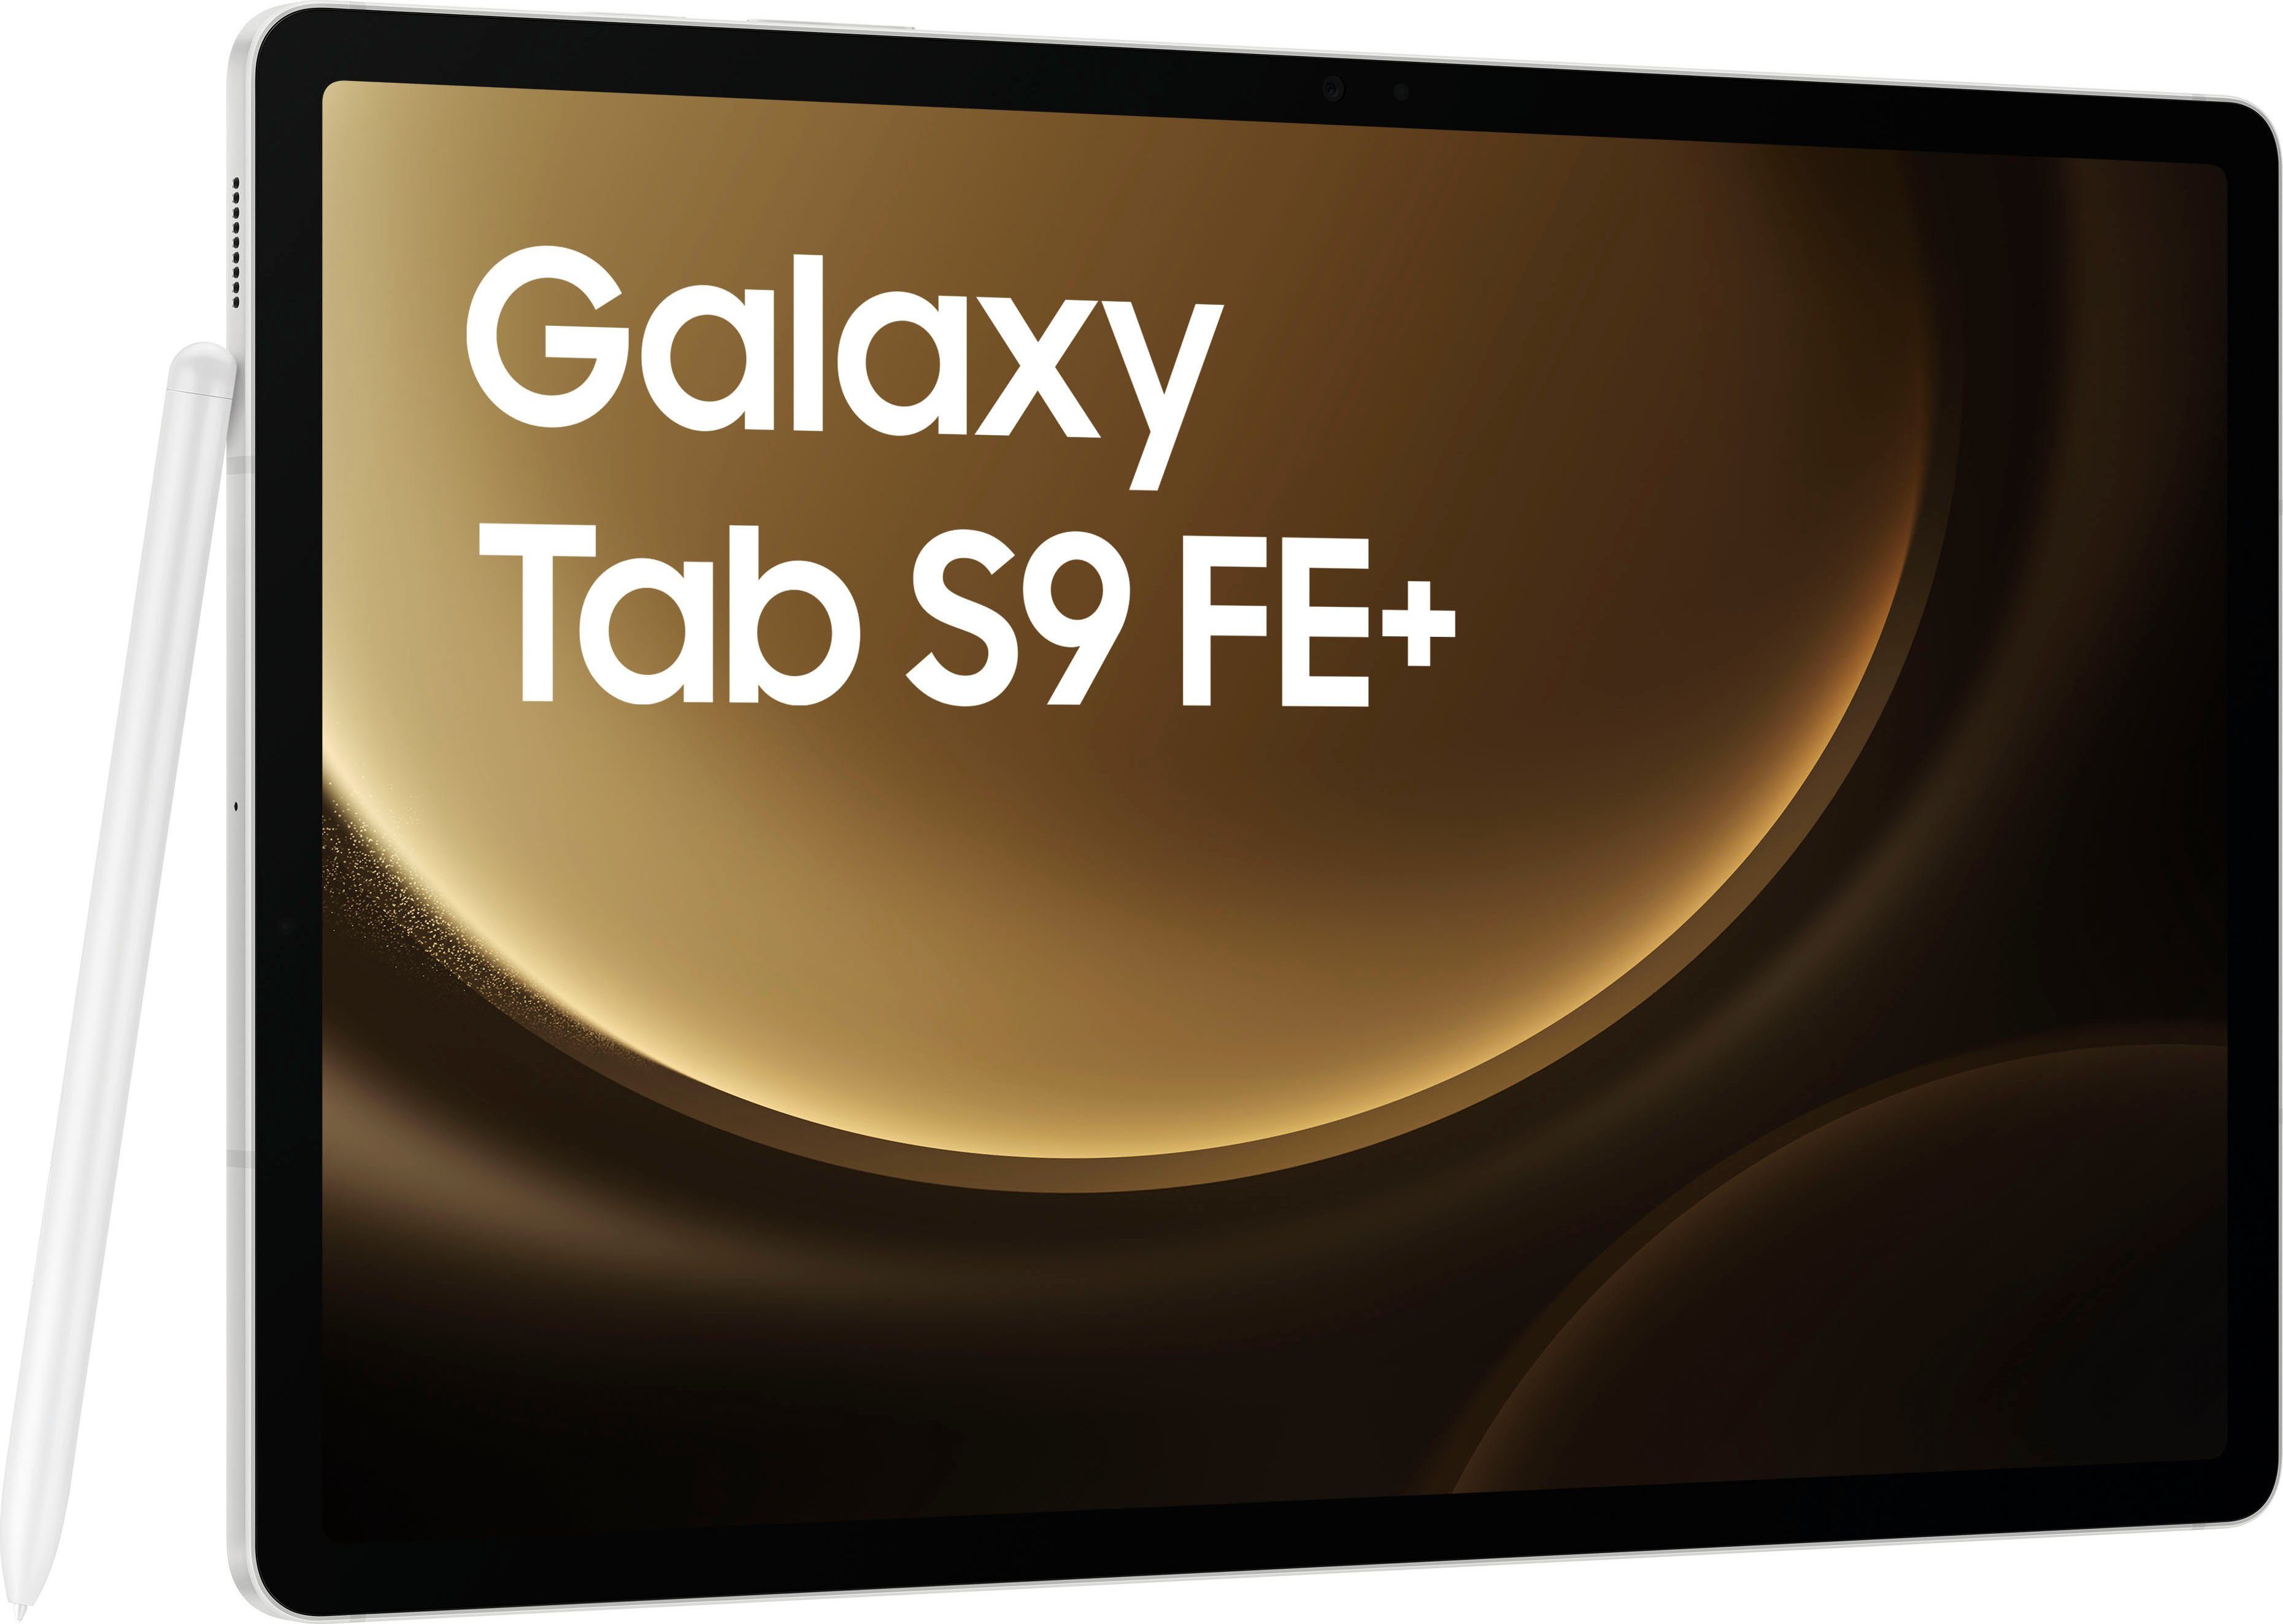 128 FE+ Samsung UI,Knox) S9 silver Android,One GB, Tab Galaxy Tablet (12,4",